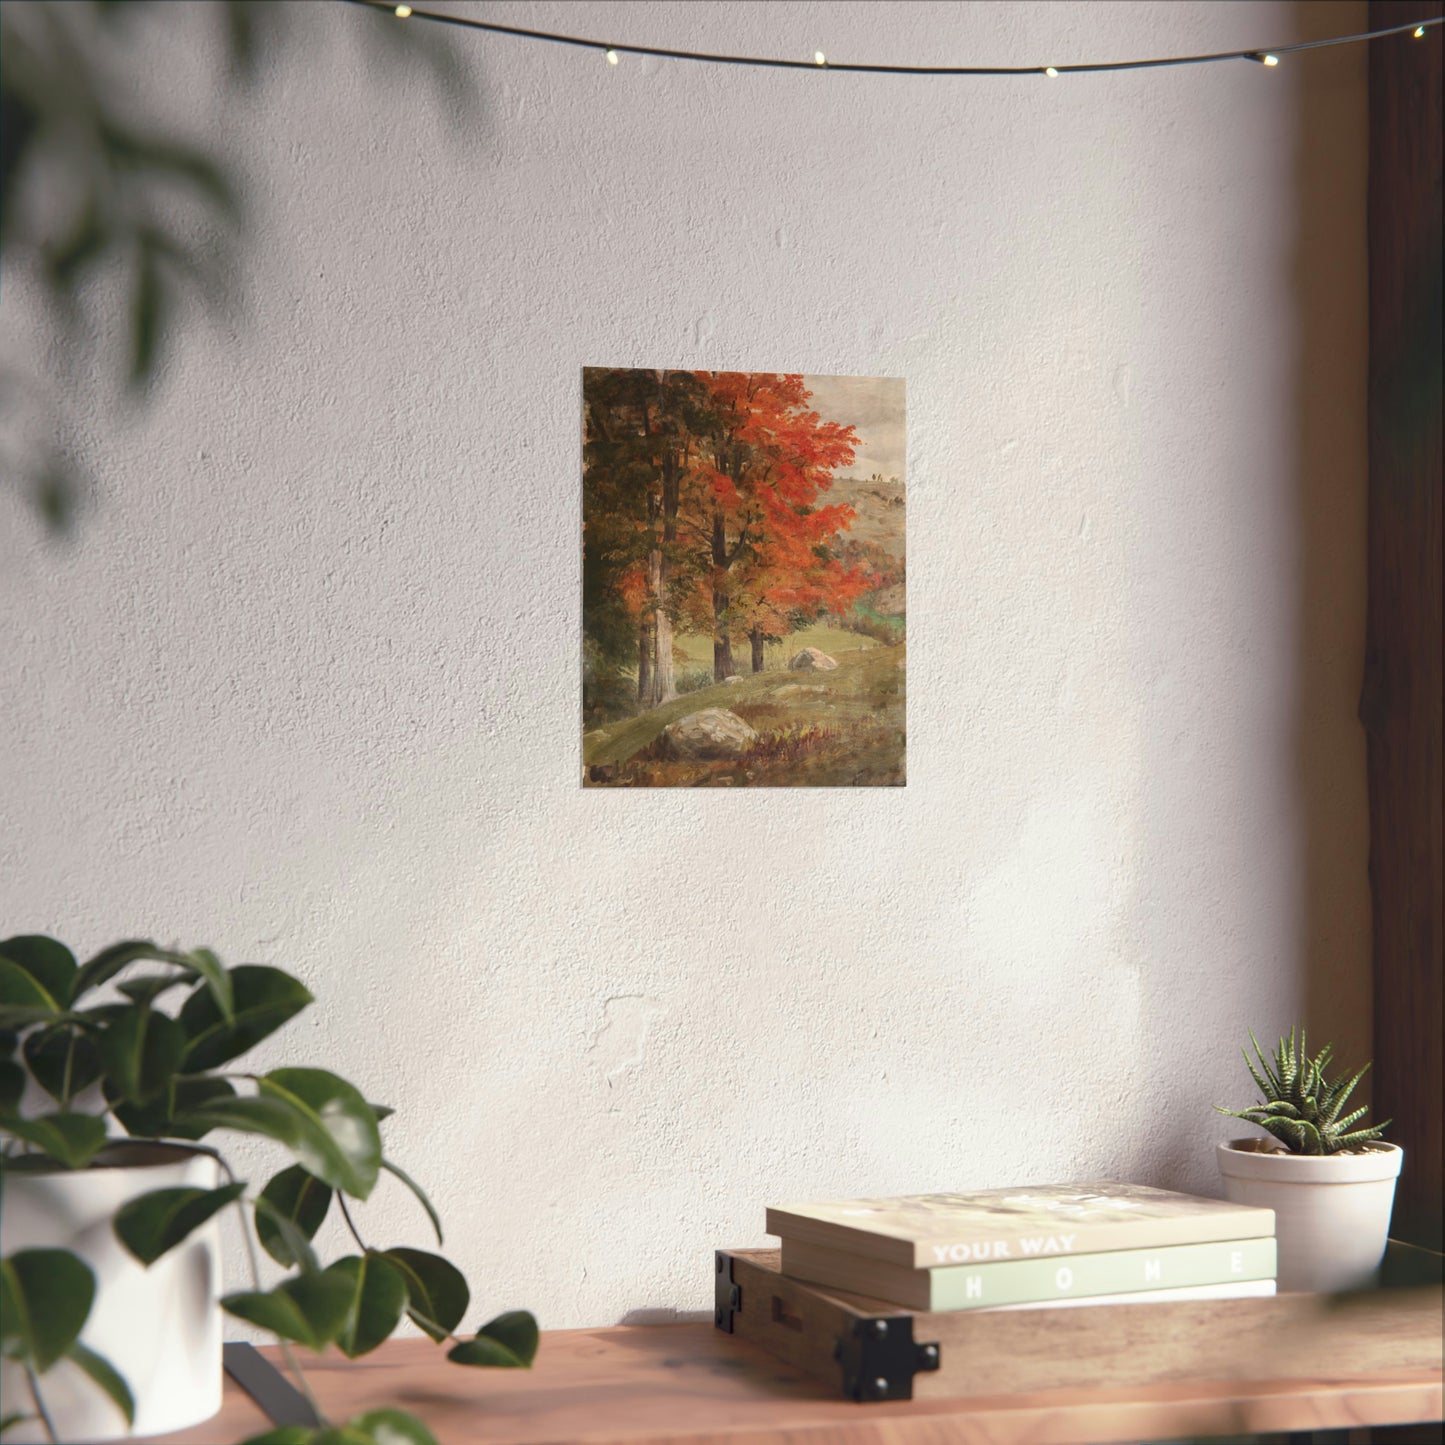 Autumn Wall Print